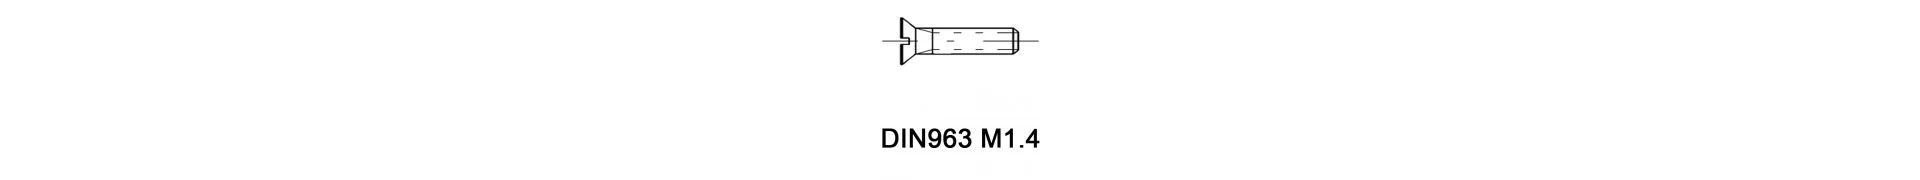 DIN963 M1.4